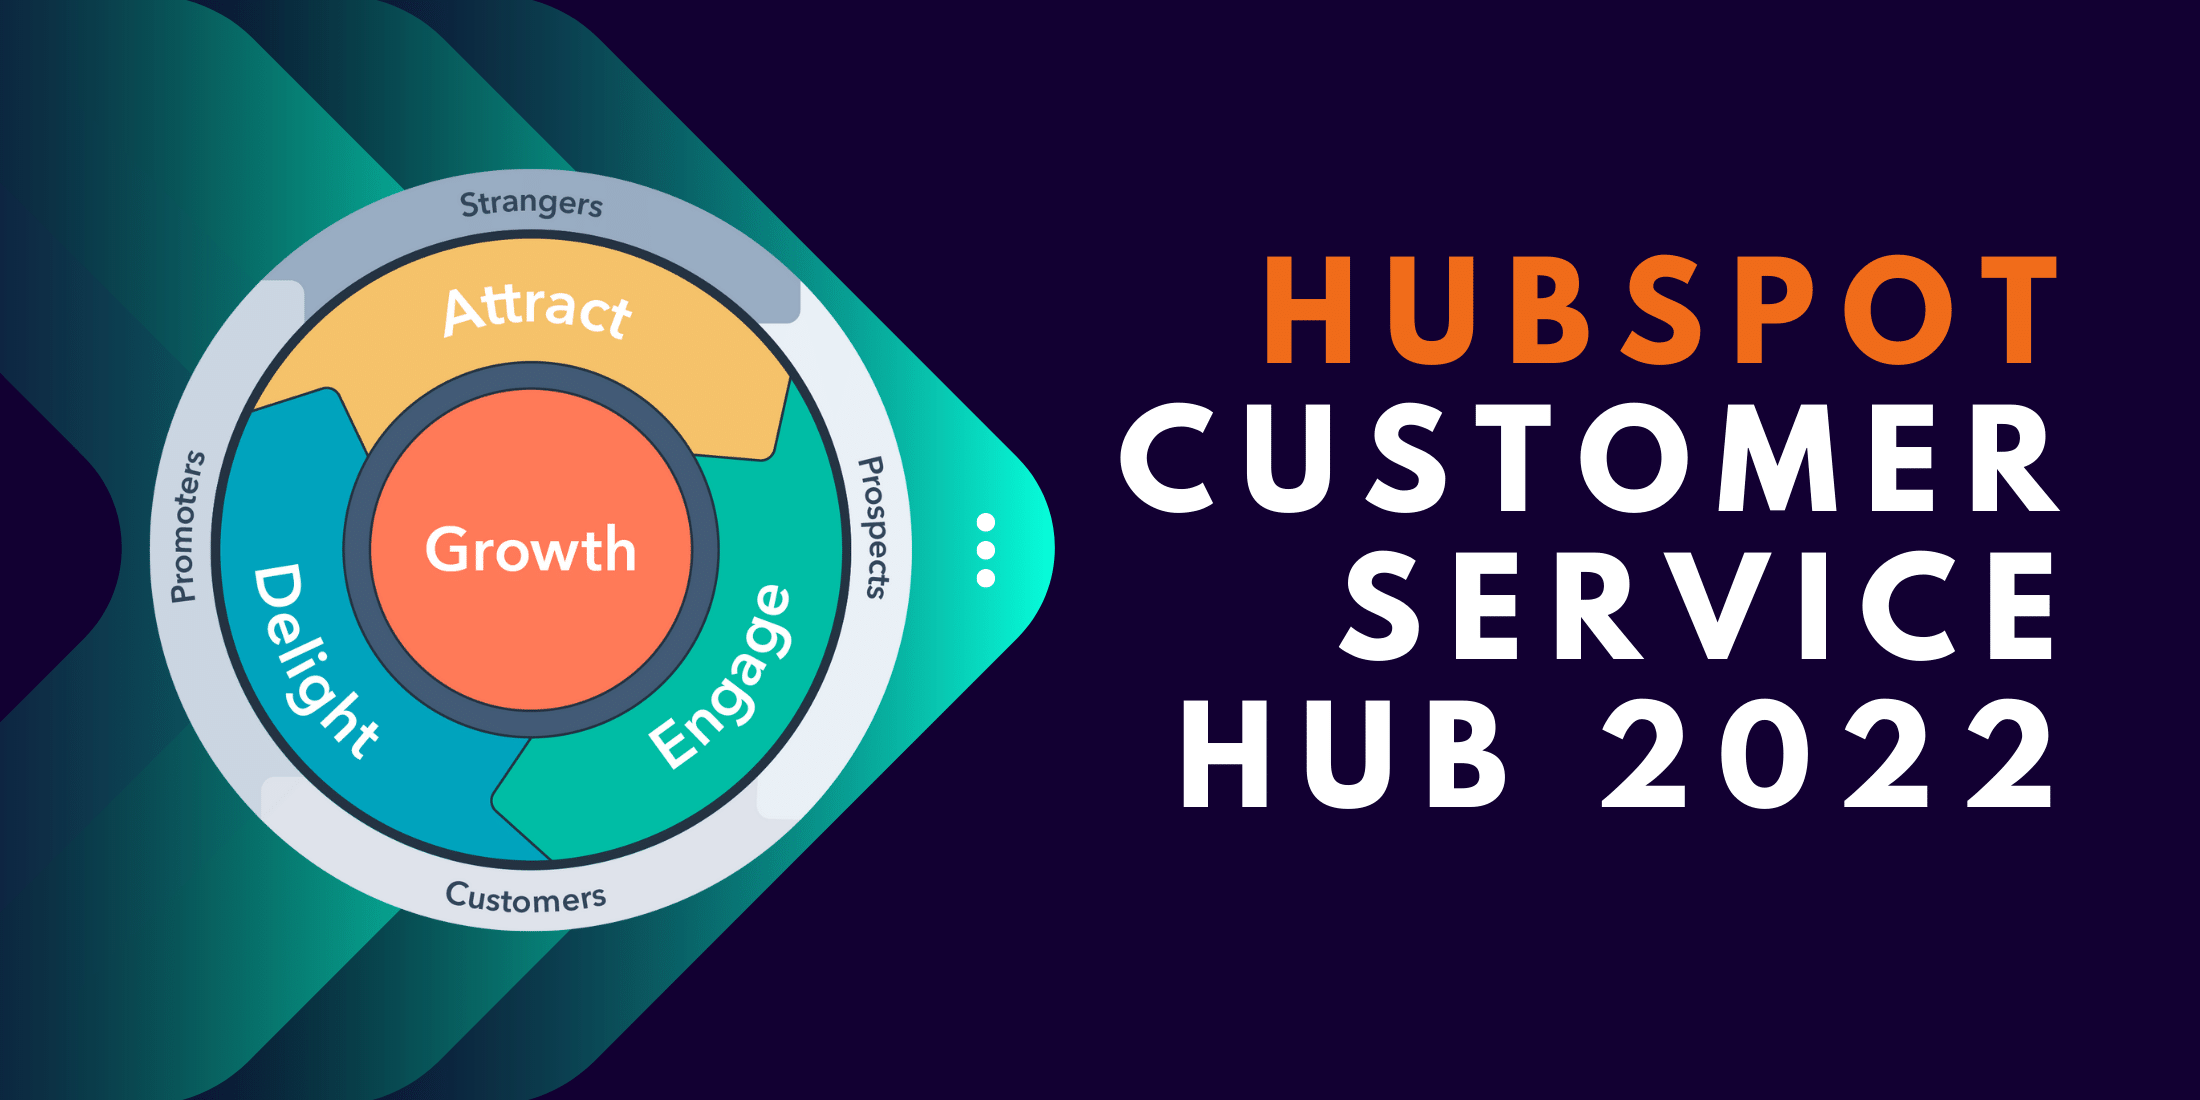 Customer Service Hub and HubSpot CRMcrm